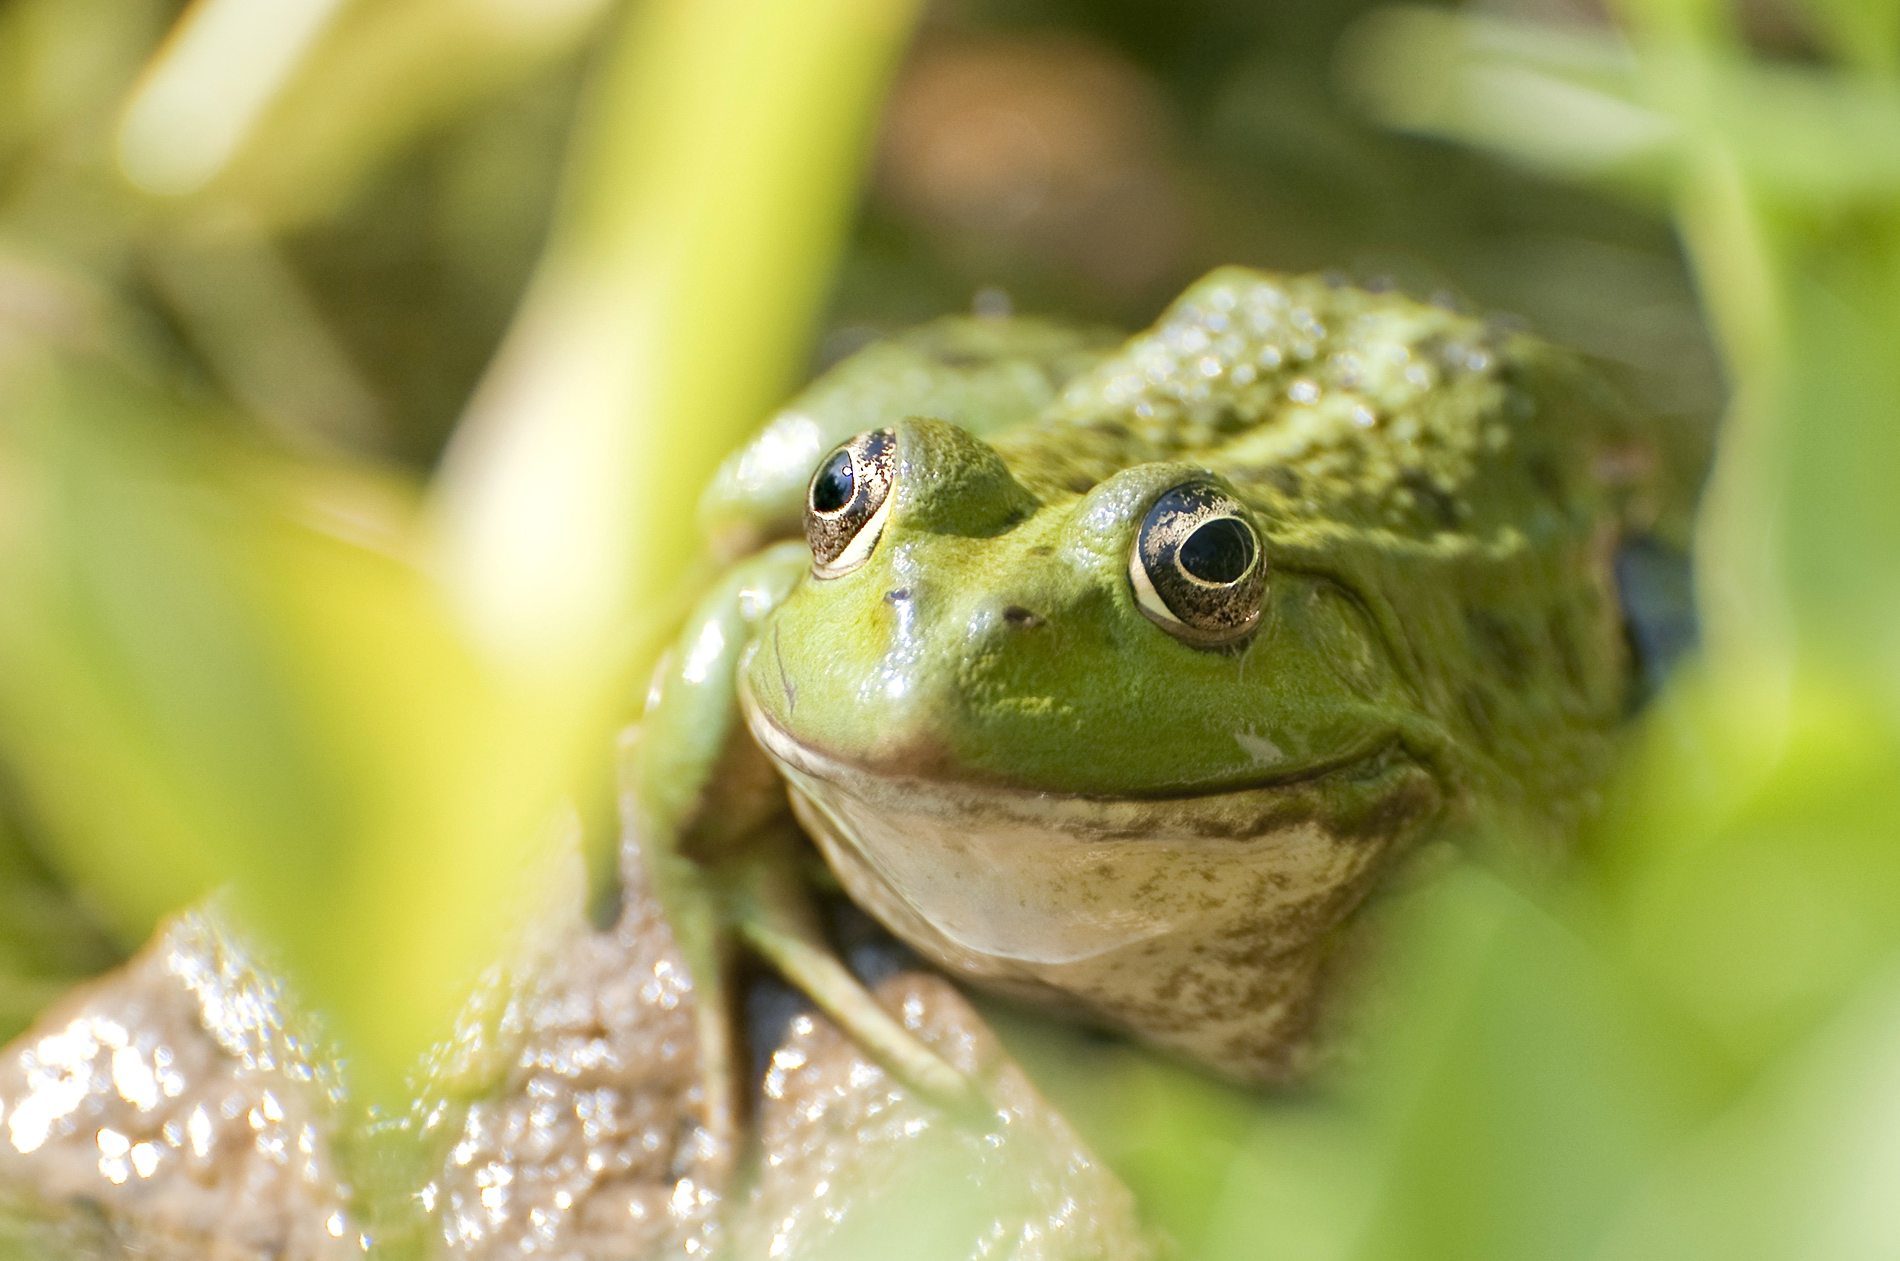 Kostenlose Bild: Grüner Frosch, Amphibie, Frosch, Reptil, Makro